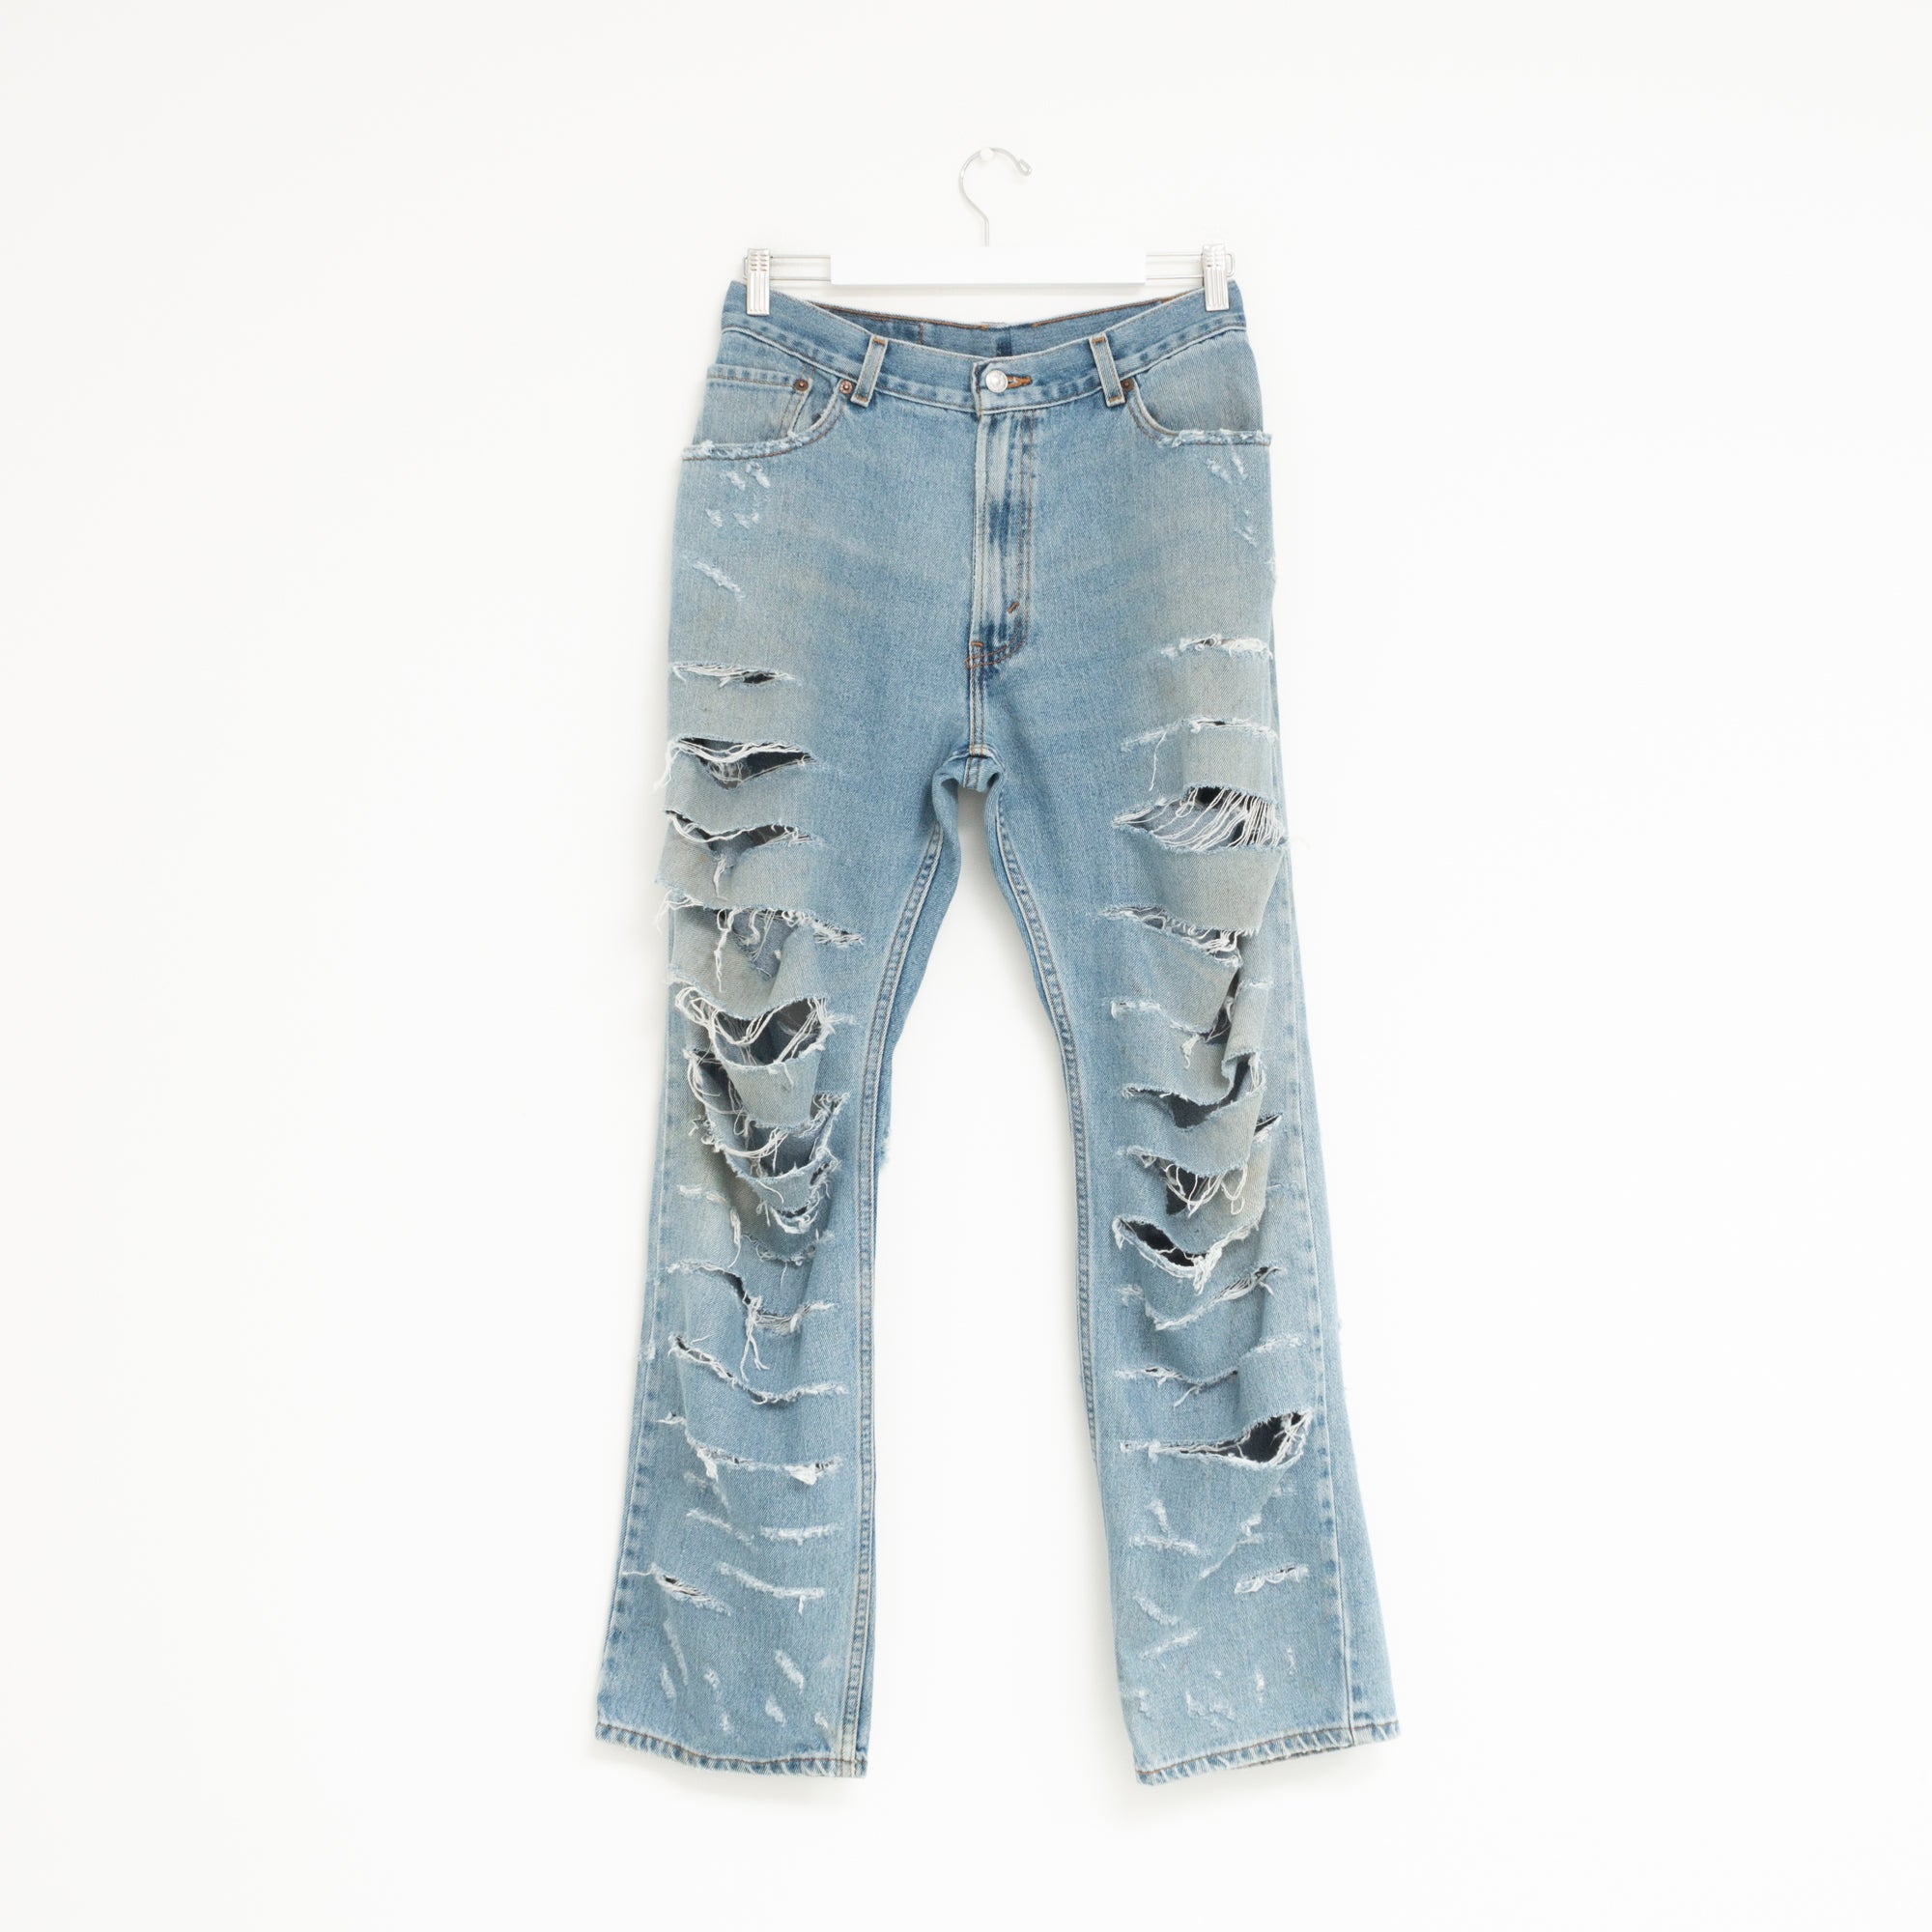 "THRASHER" Jeans W31 L31